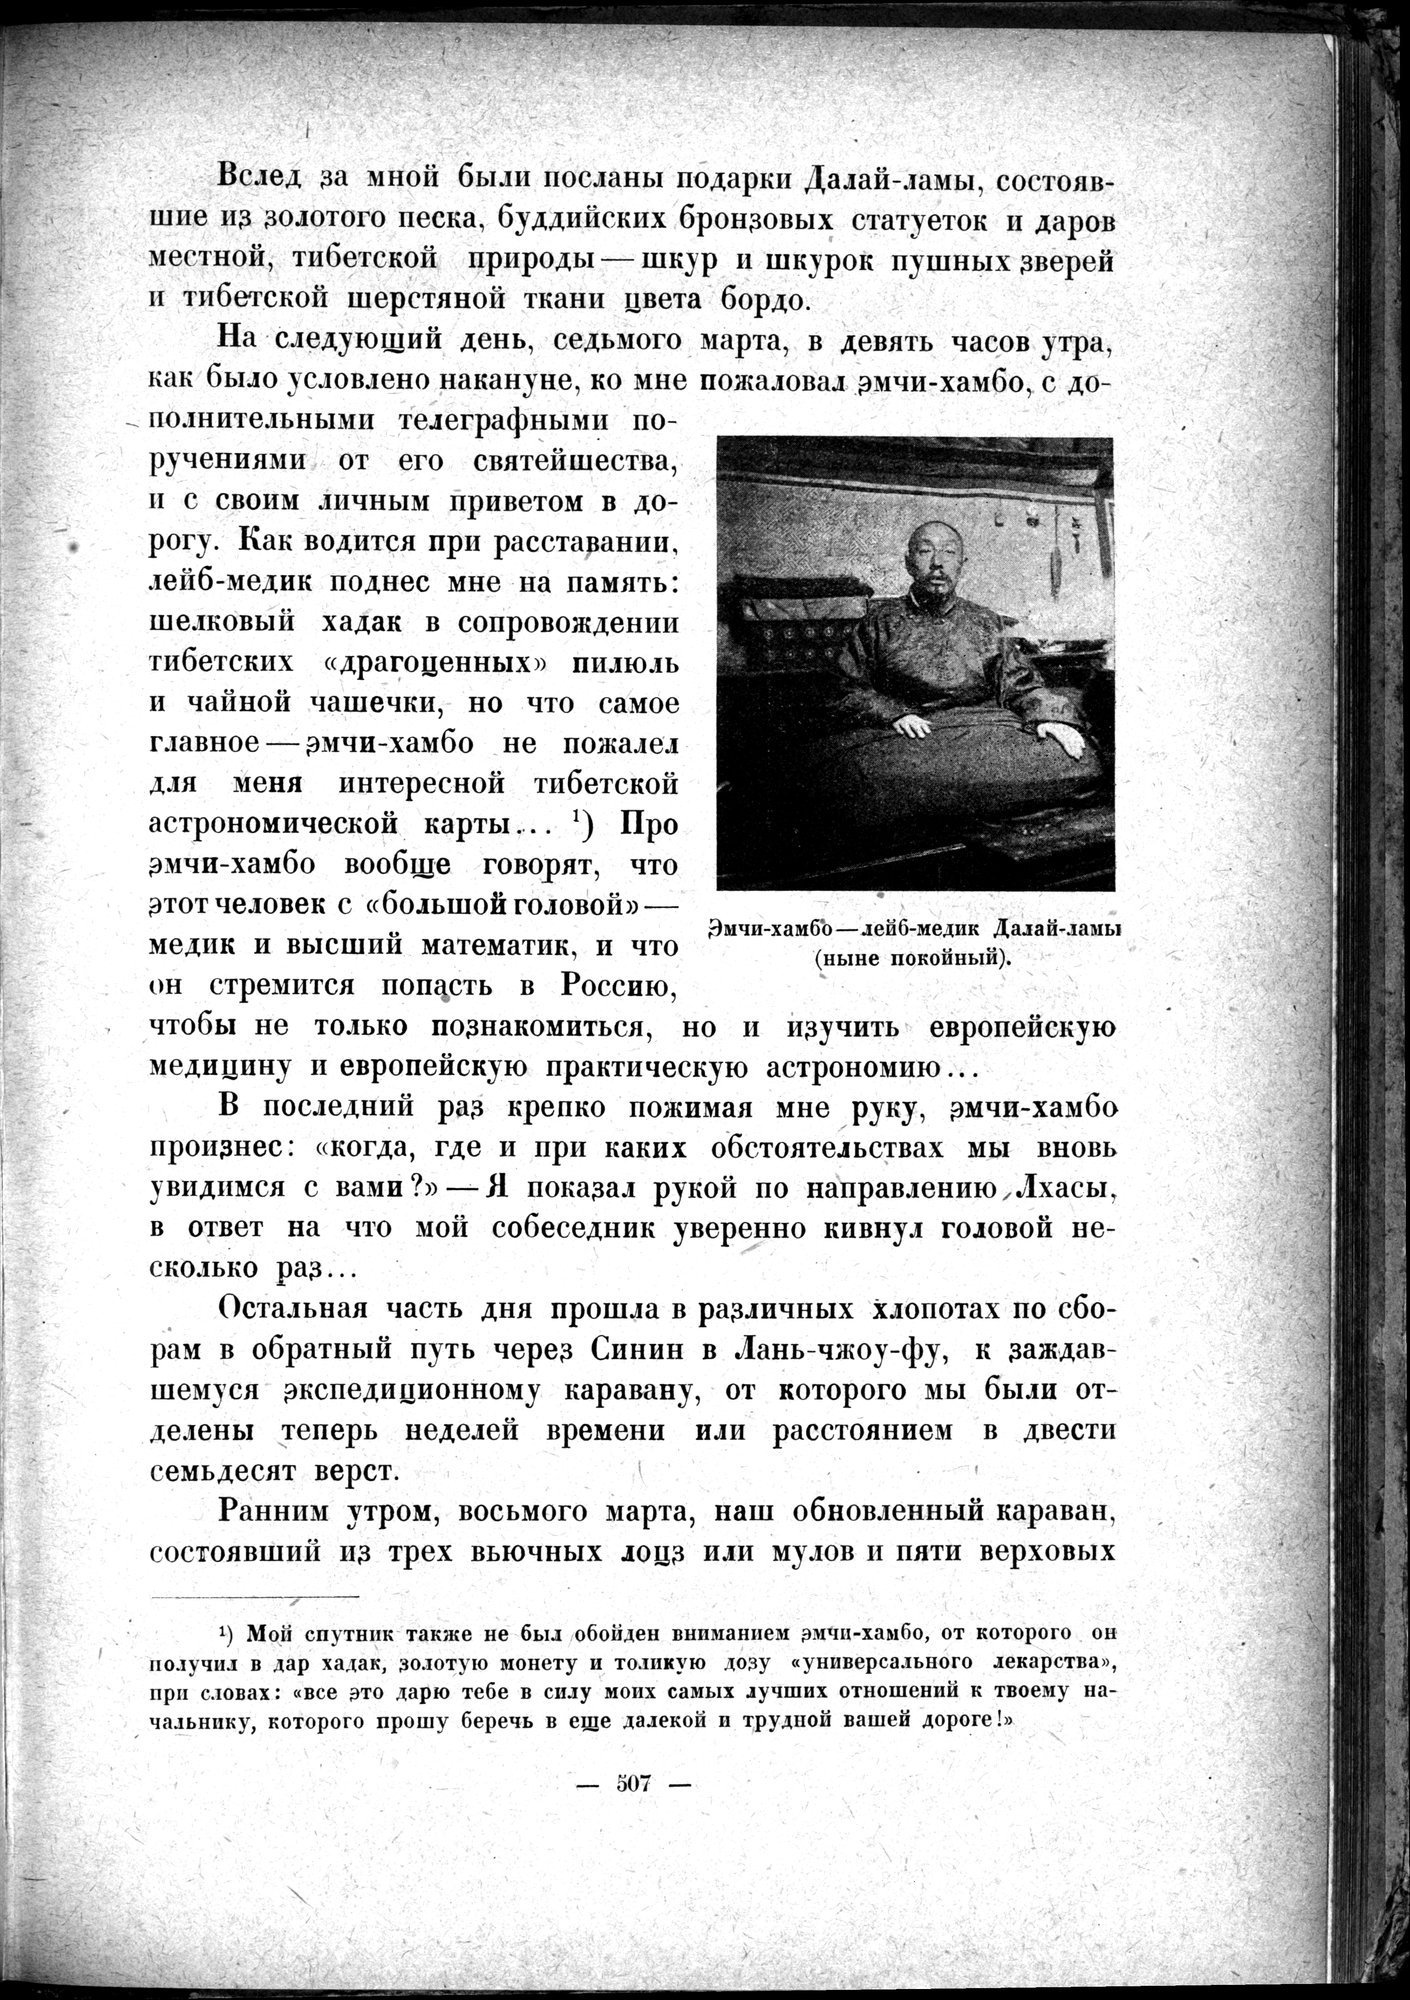 Mongoliya i Amdo i mertby gorod Khara-Khoto : vol.1 / Page 583 (Grayscale High Resolution Image)